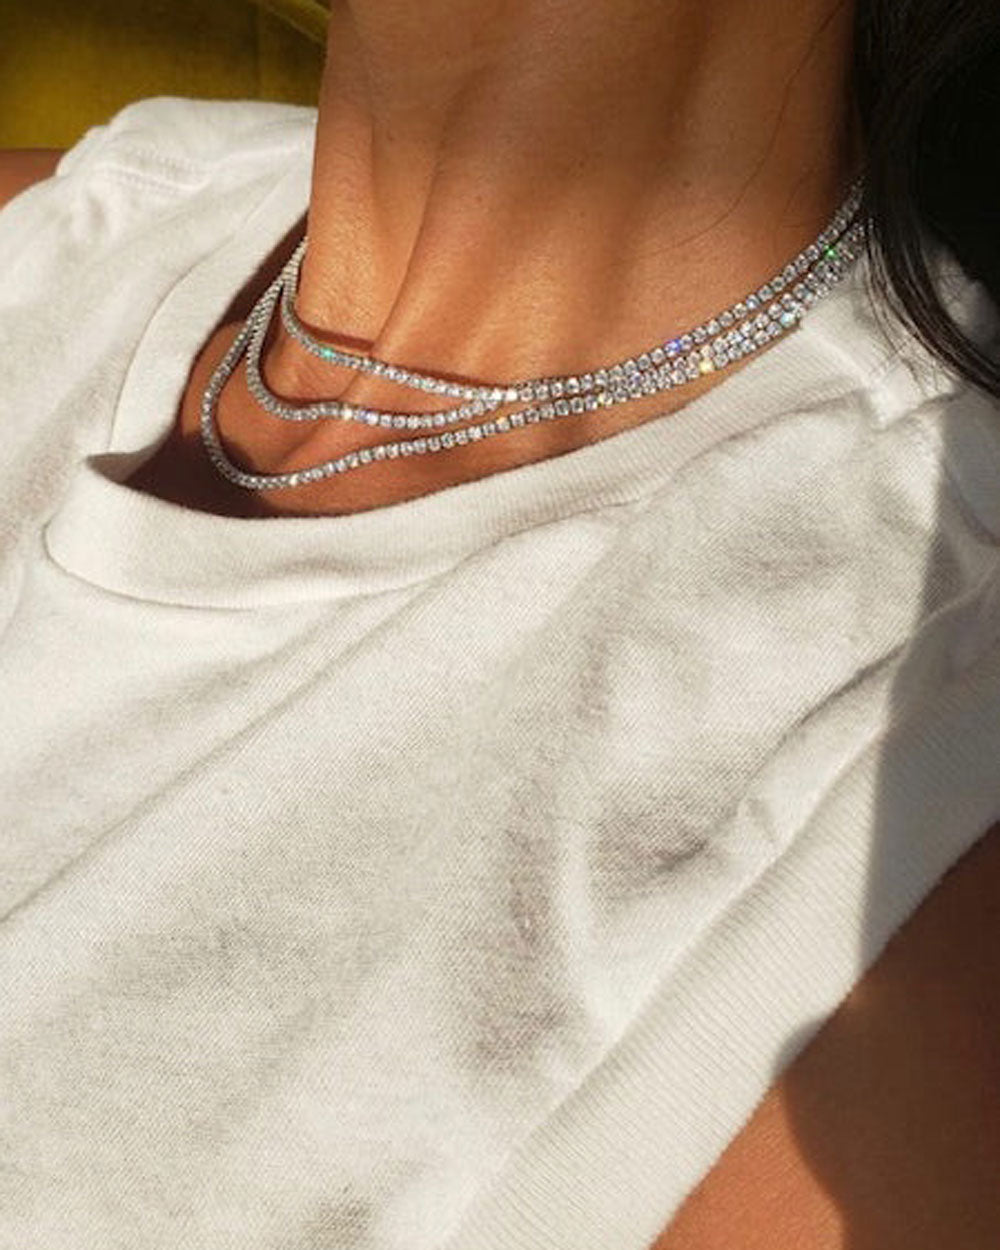 White Rhodium Tish Crystal Tennis Necklace